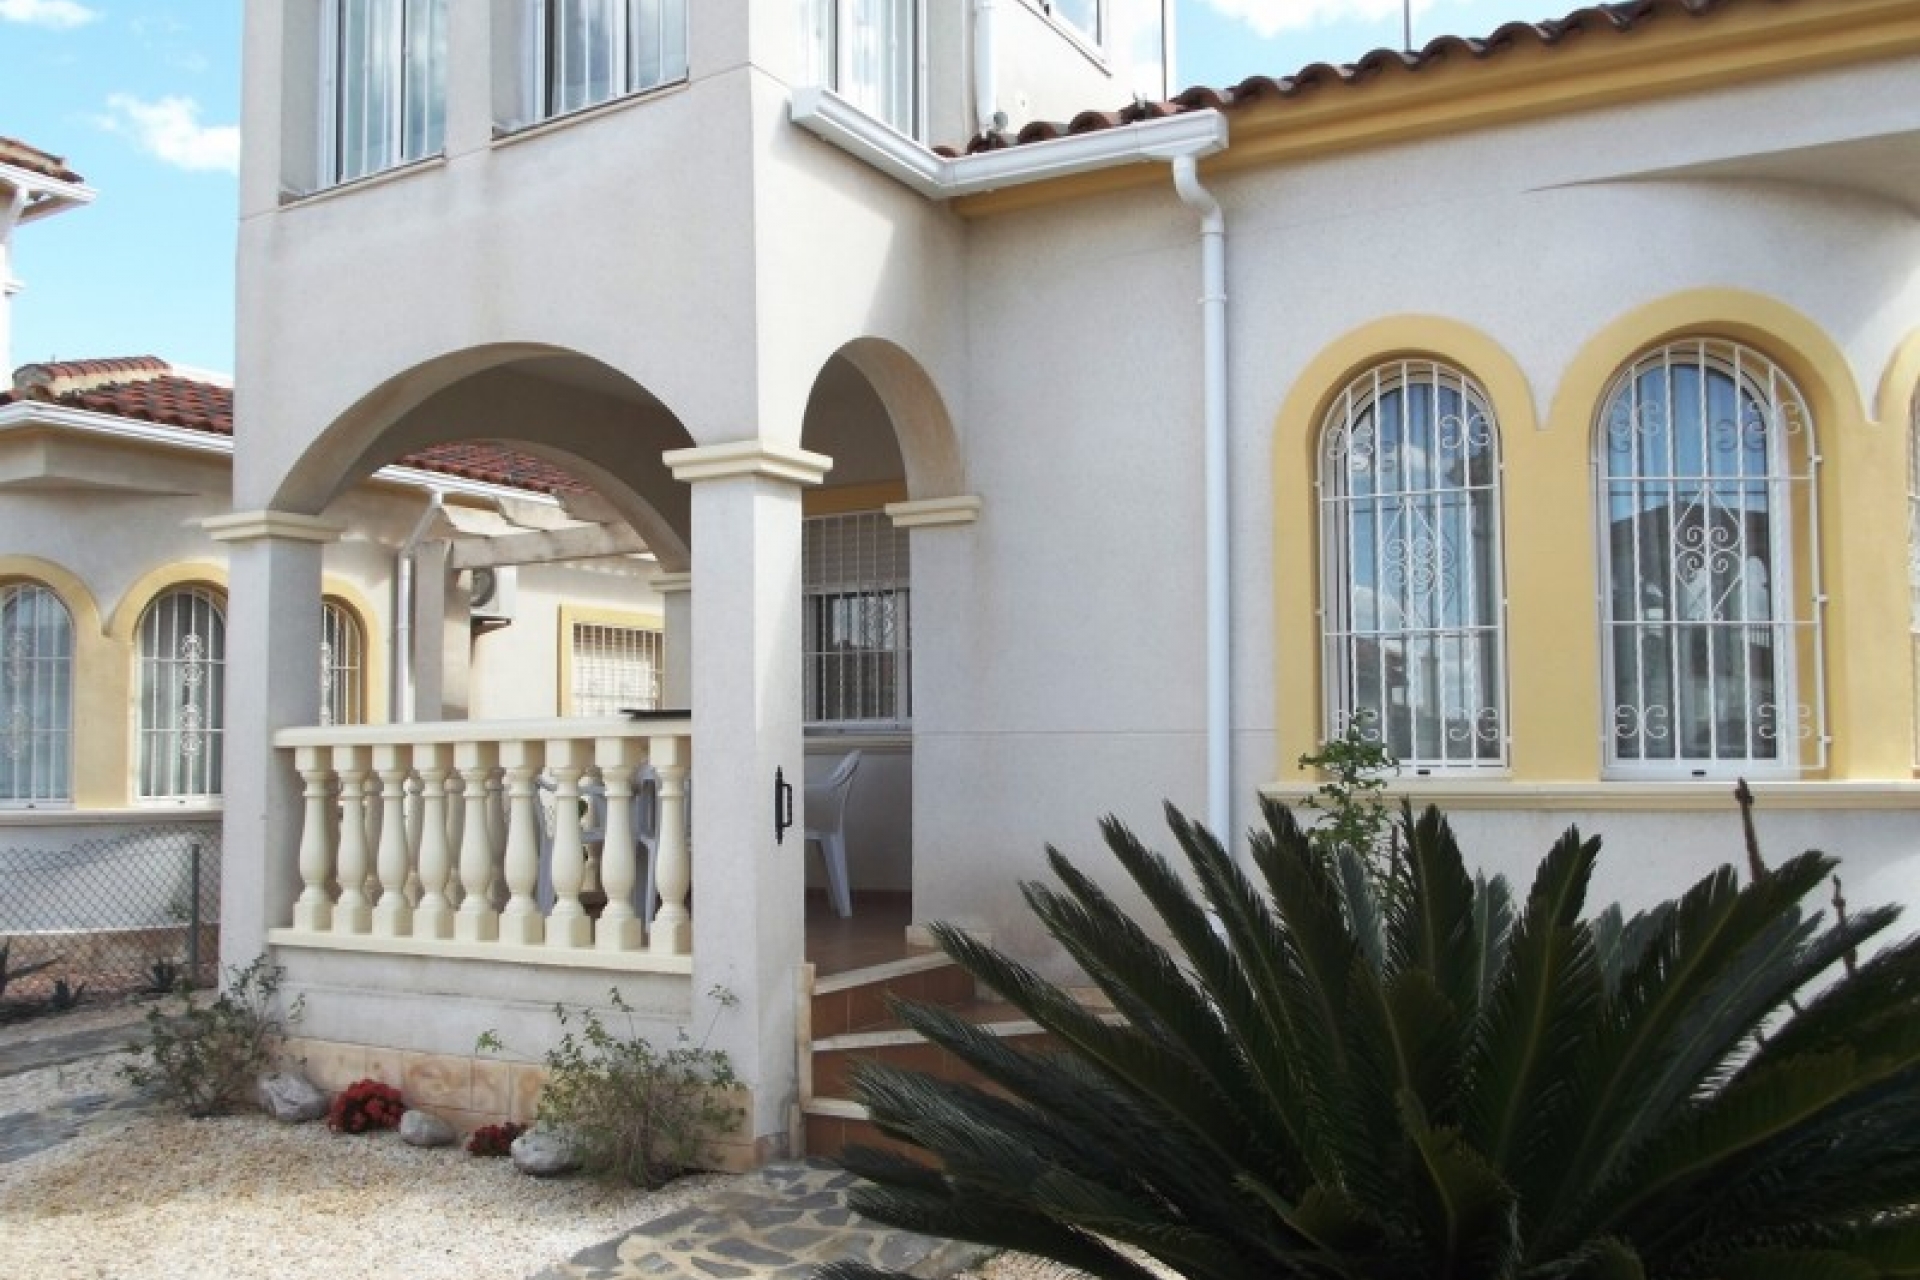 Villa for sale in benimar, cheap bargain property for sale, close to benijofar, guardamar and quesada, costa blanca,spain